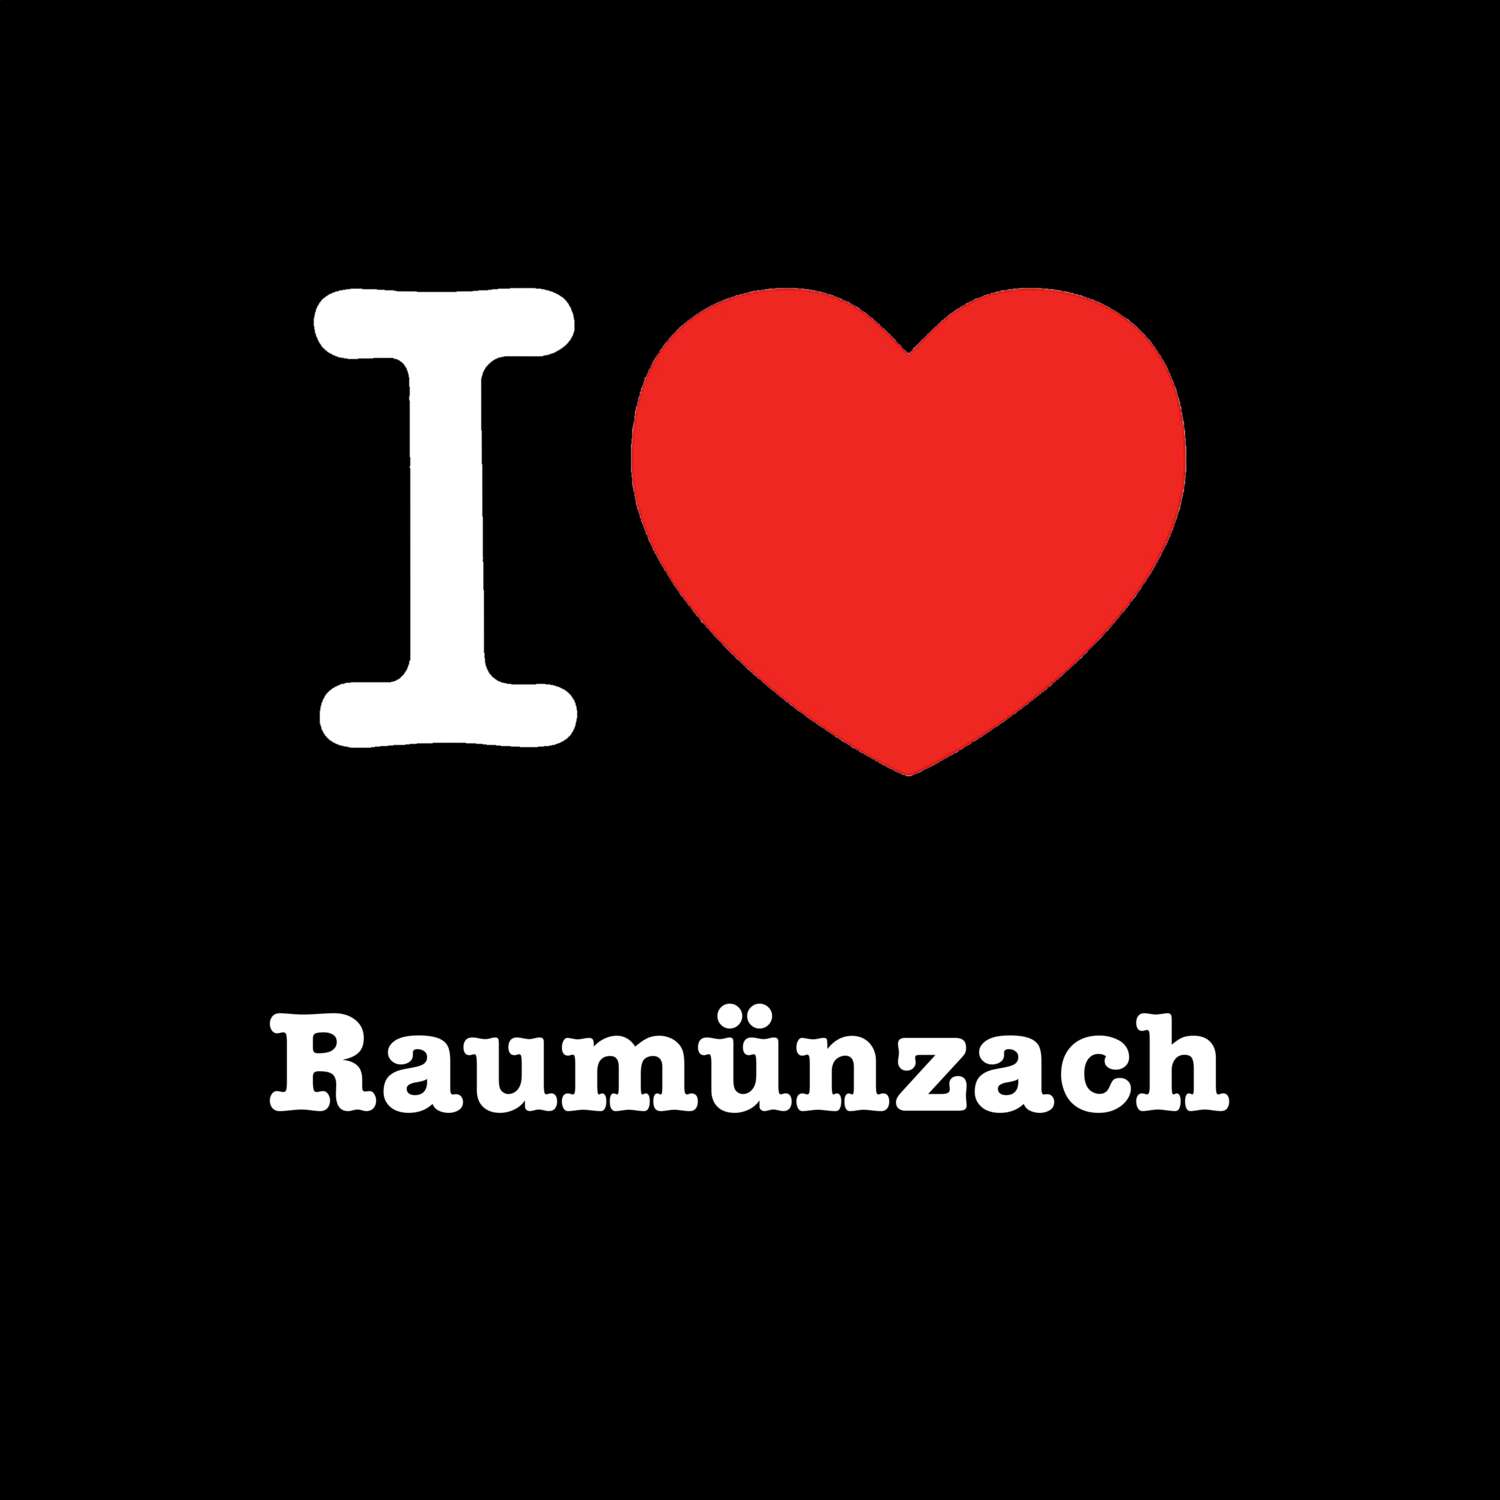 Raumünzach T-Shirt »I love«